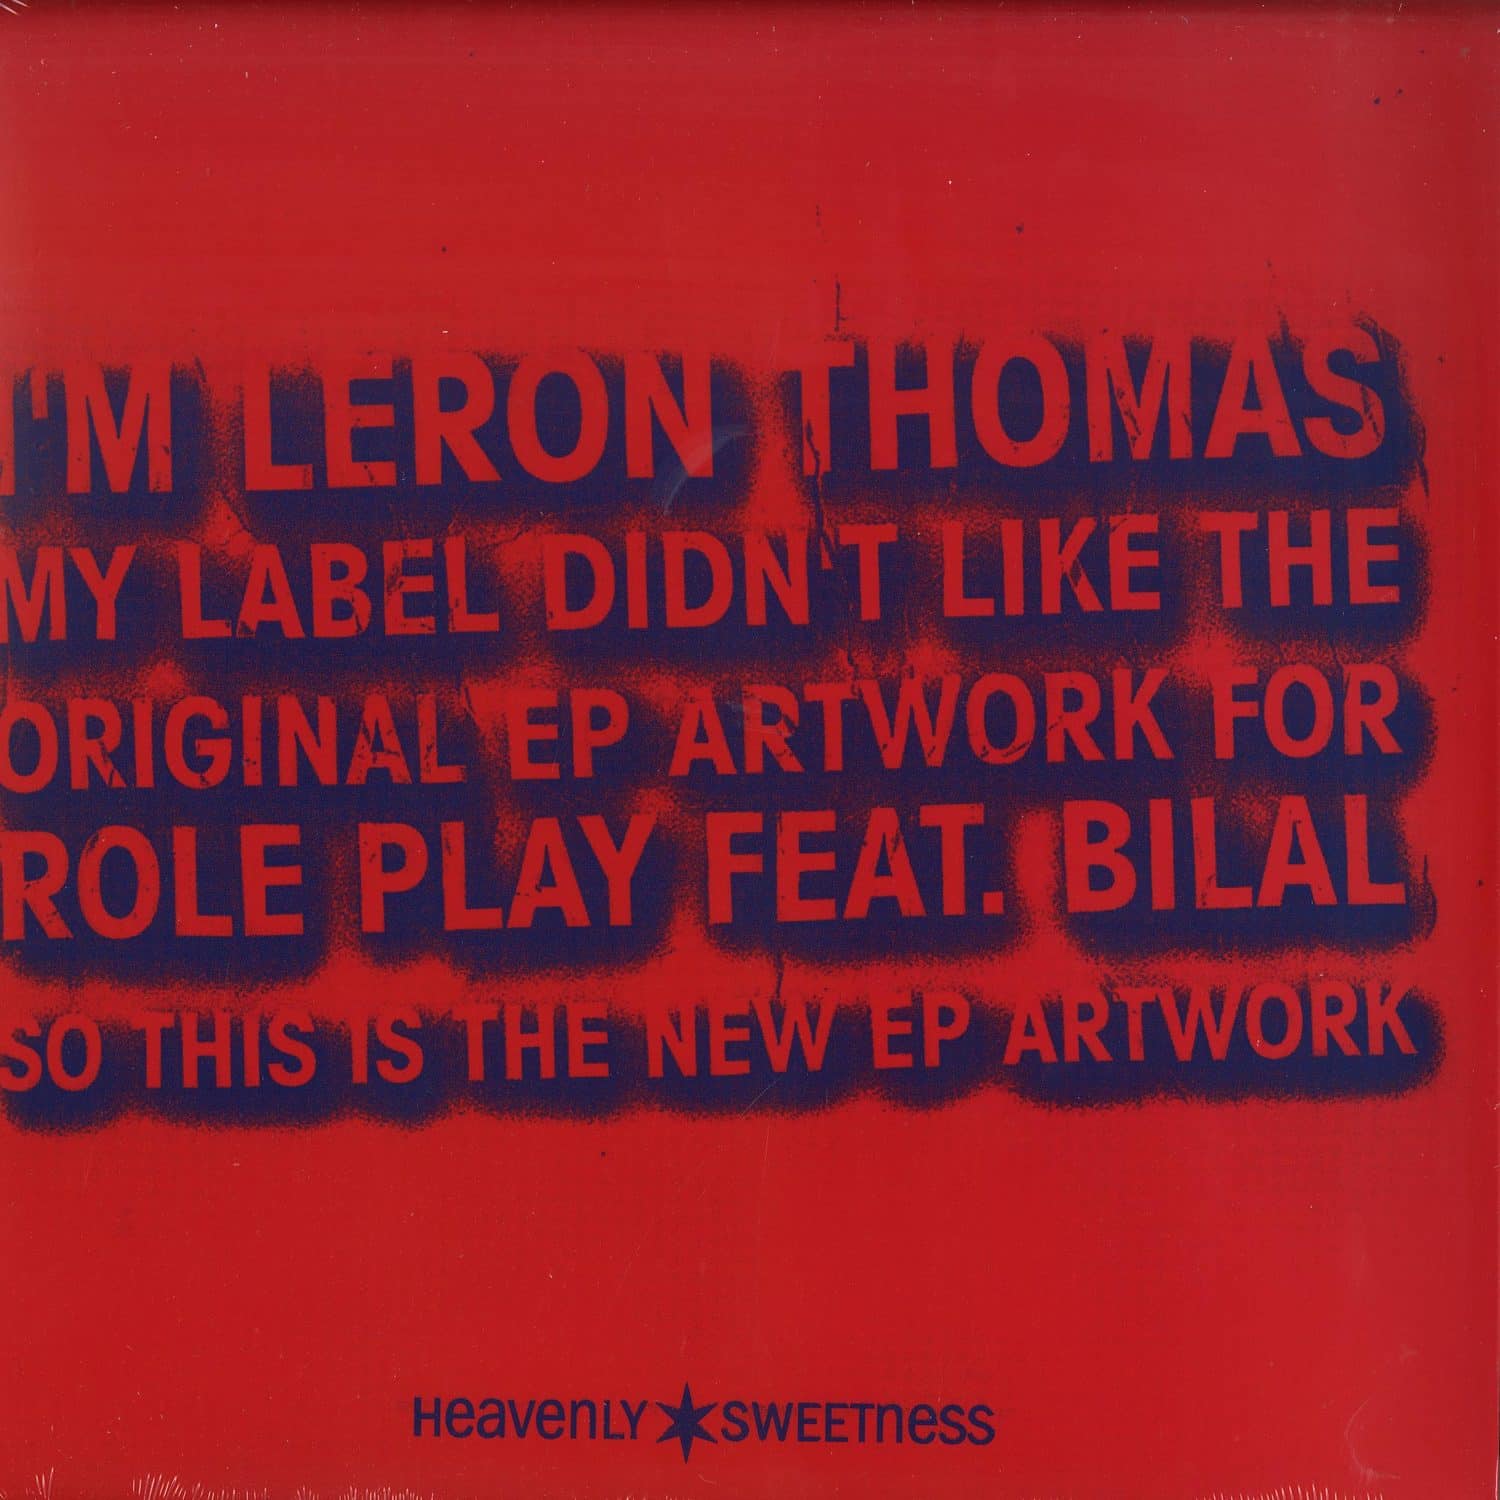 Leron Thomas - ROLE PLAY 